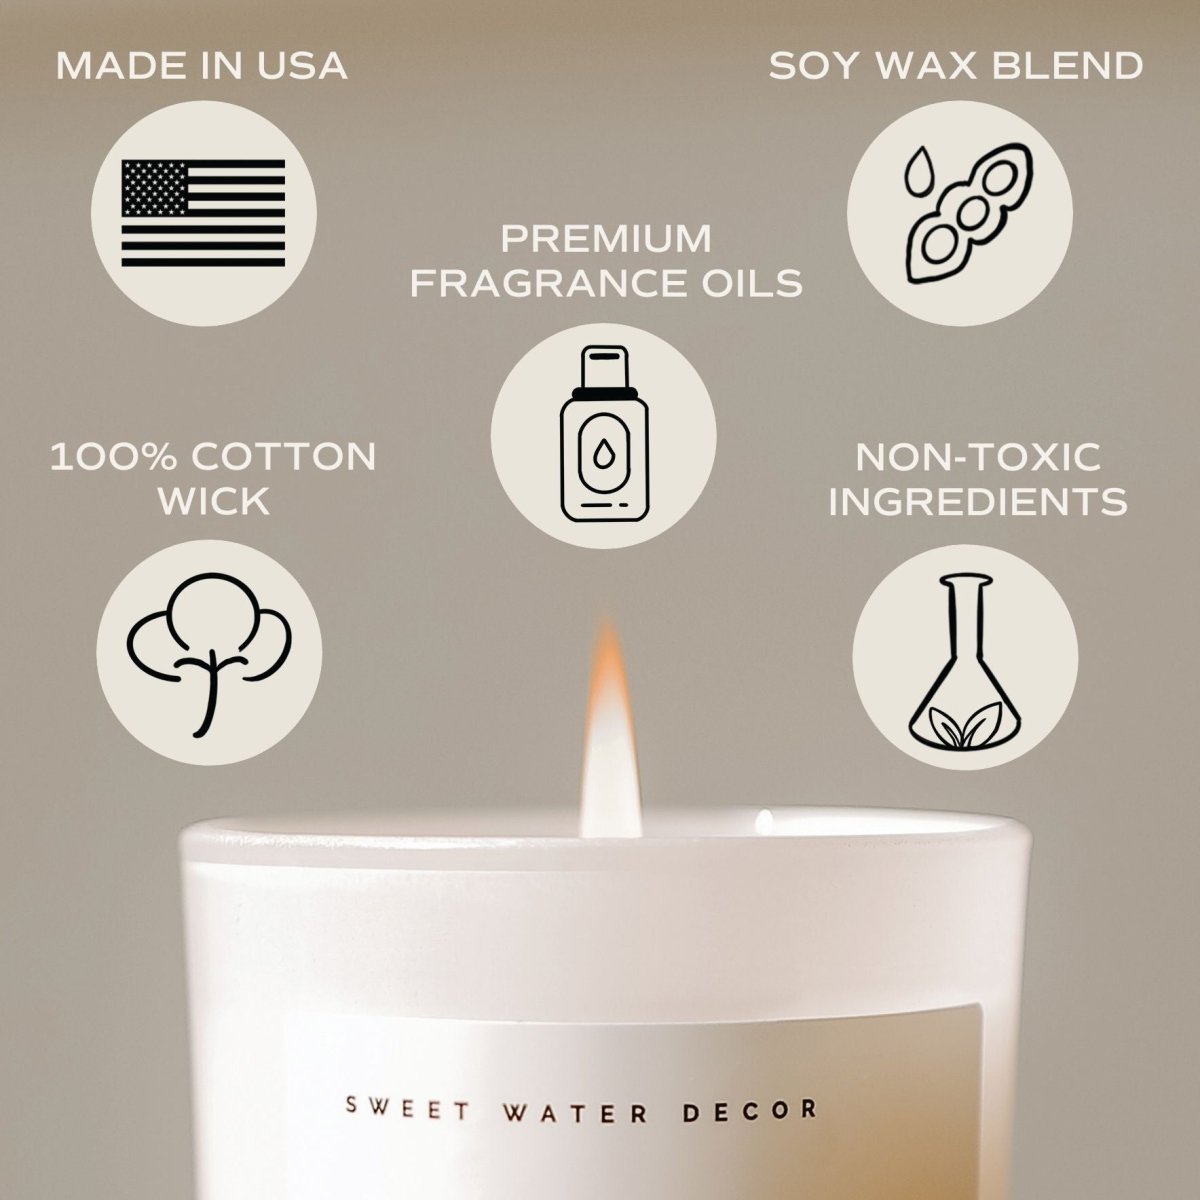 Sweet Water Decor Cozy Season Soy Candle - White Jar - 11 oz - lily & onyx